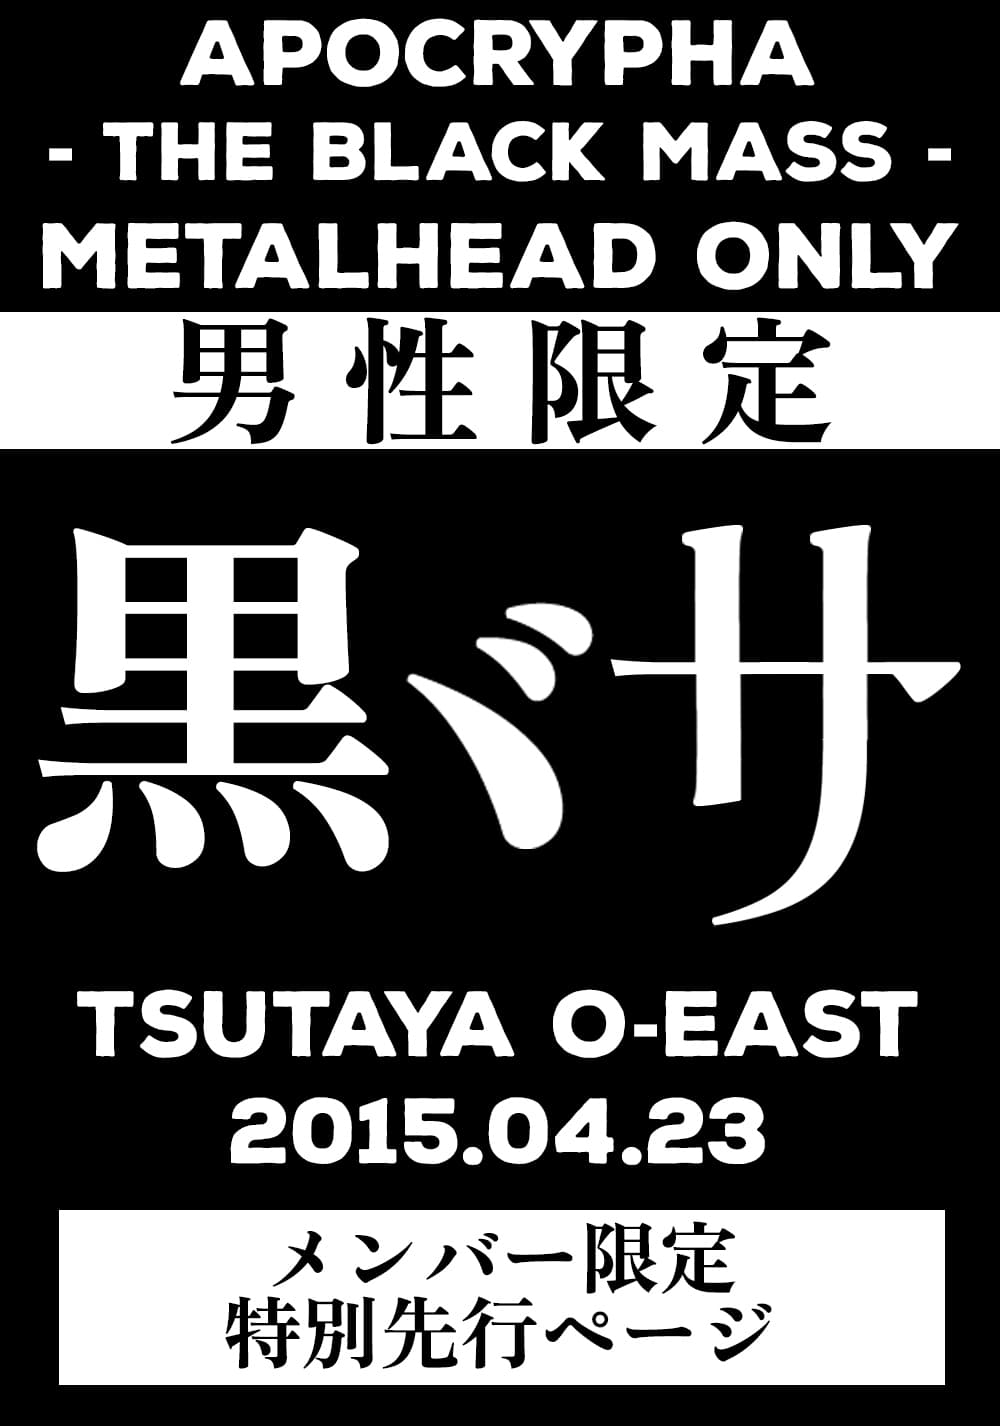 BABYMETAL - Live at Tsutaya O-East - Apocrypha The Black Mass